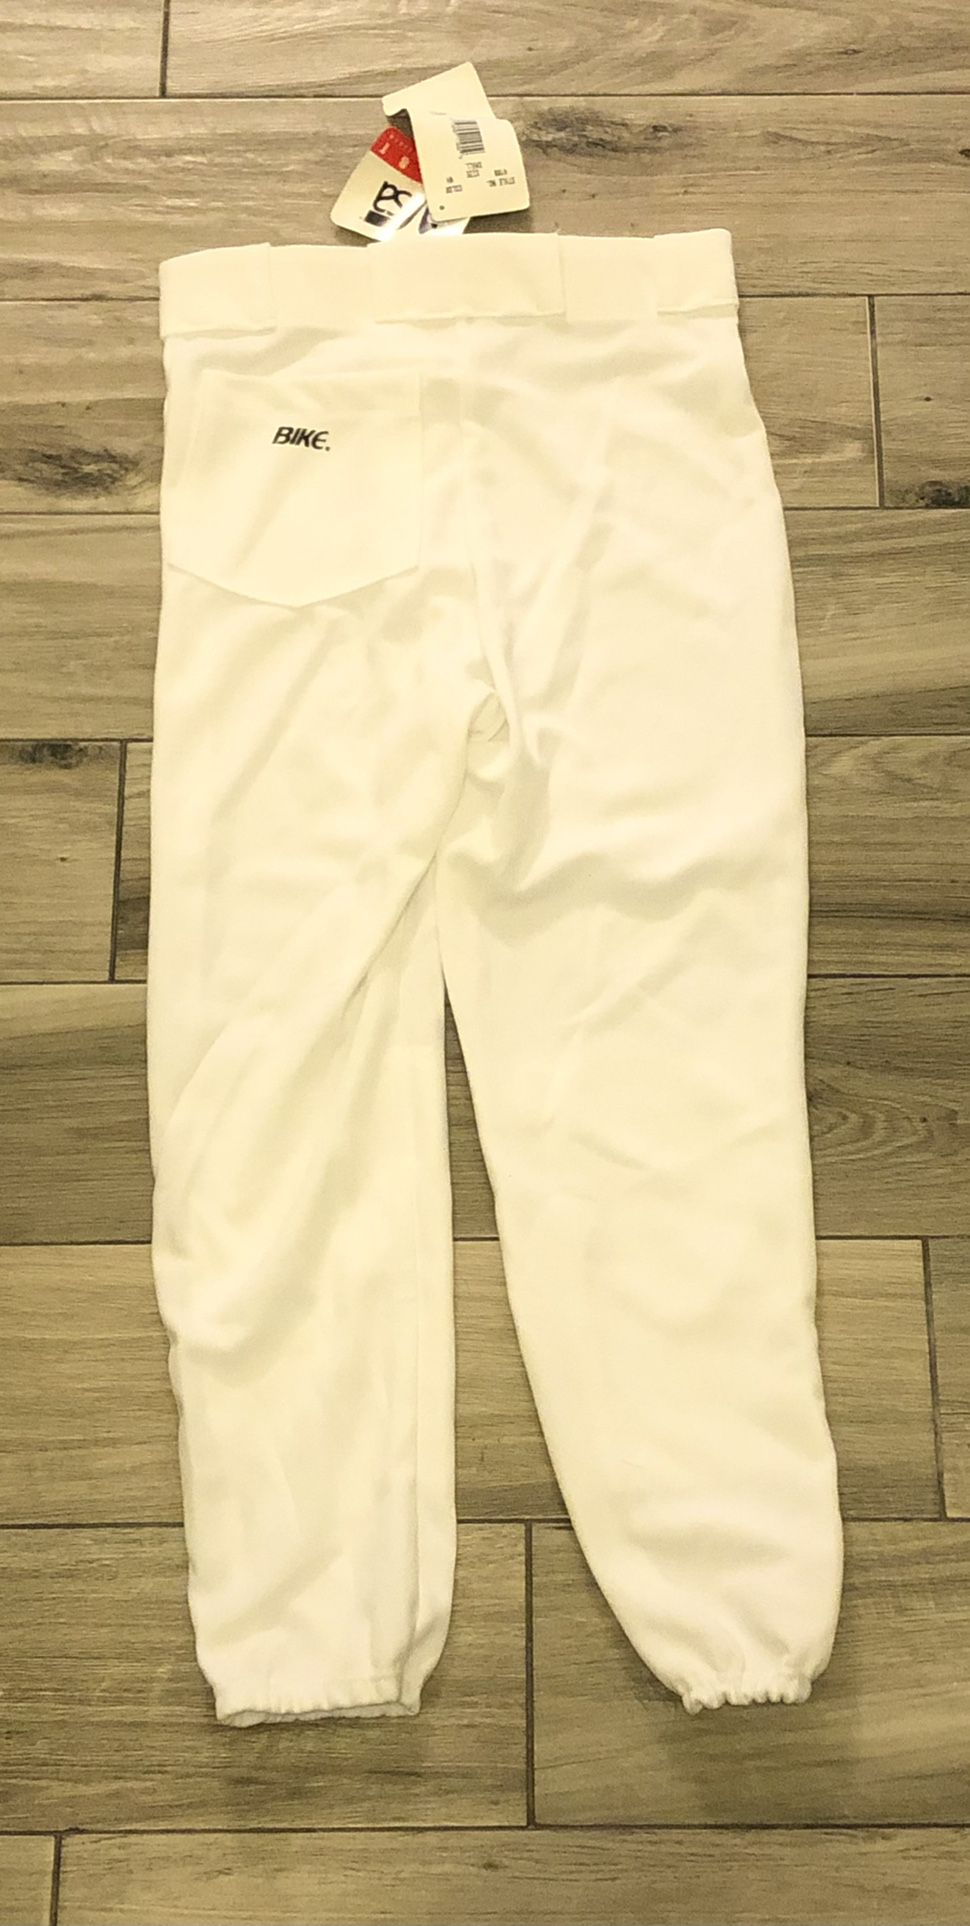 Bike Athletic Style 4108 White Adult Baseball Pants w/Belt Loops Size Small NEW